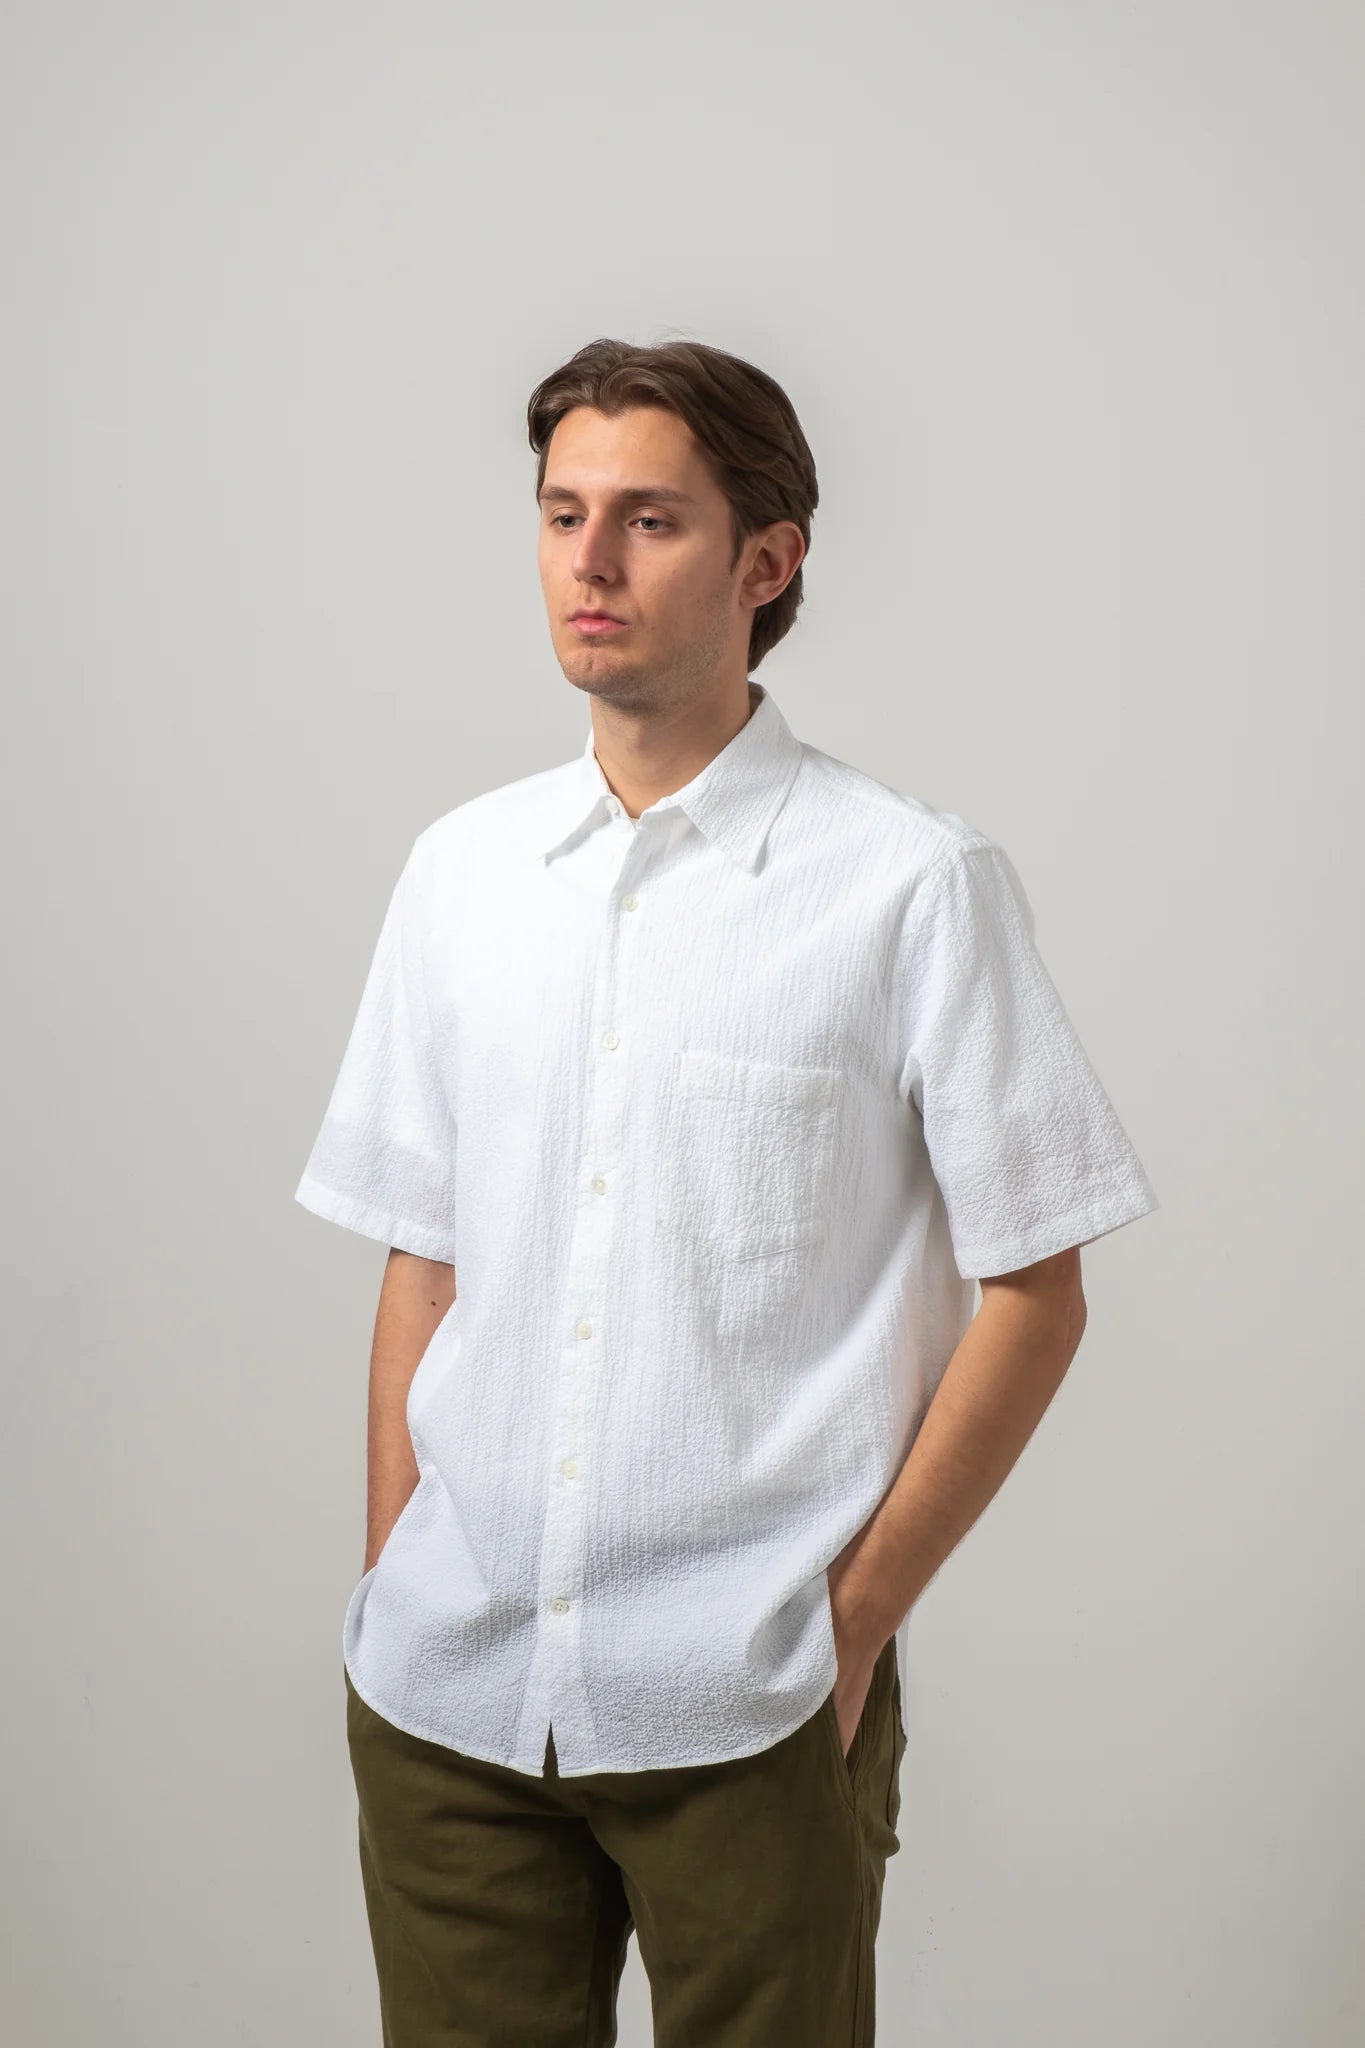 C.O.F. Studio Standard Short Sleeve Seersucker Shirt in white